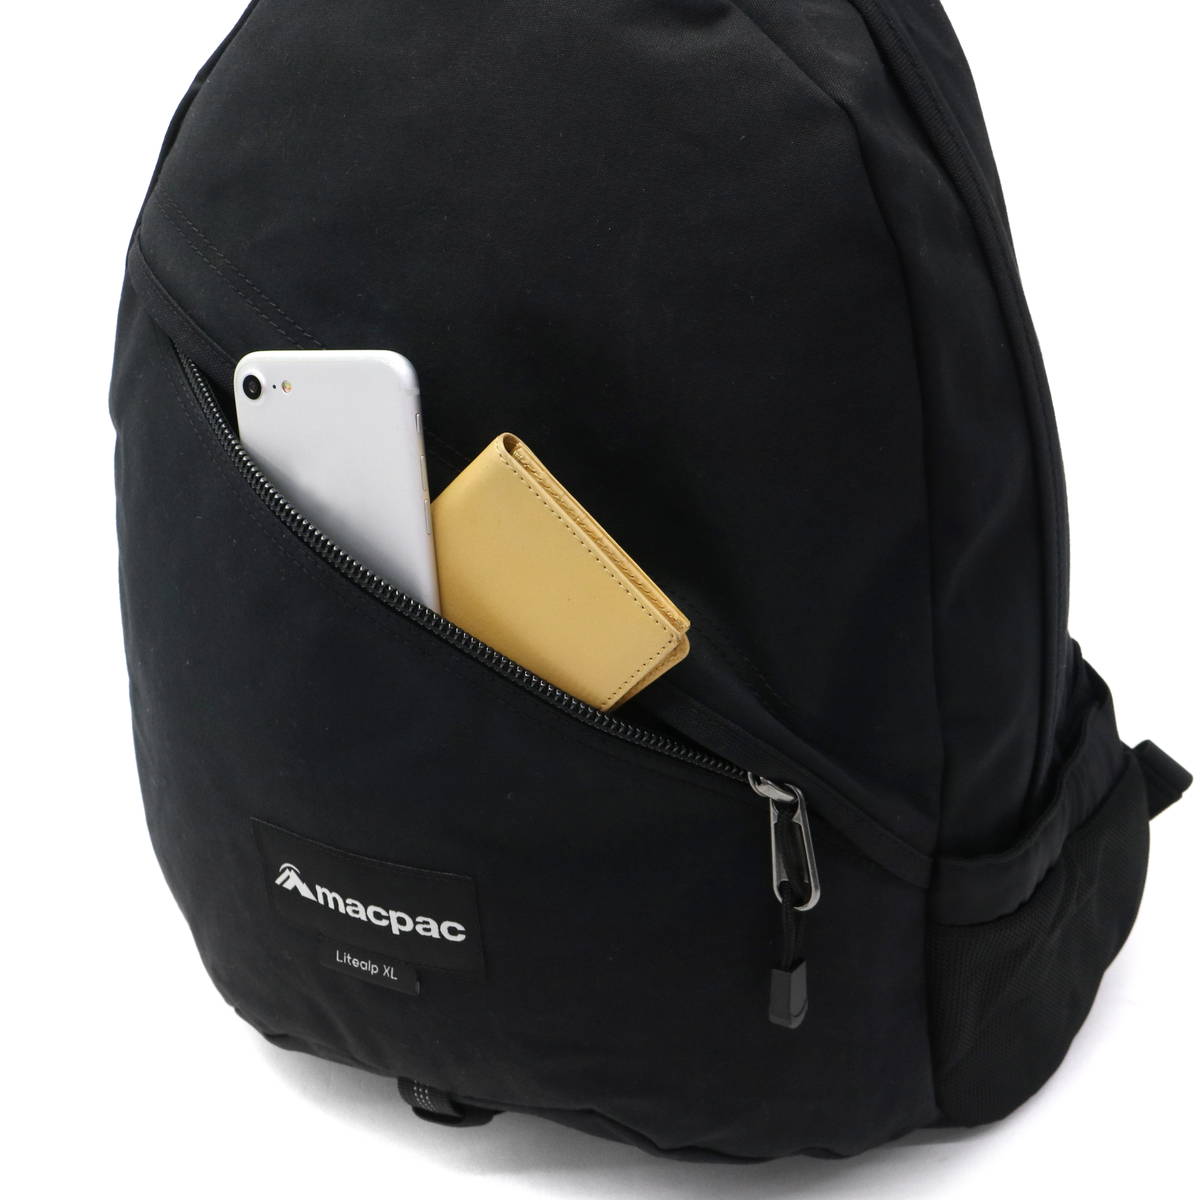 xl backpacks for school